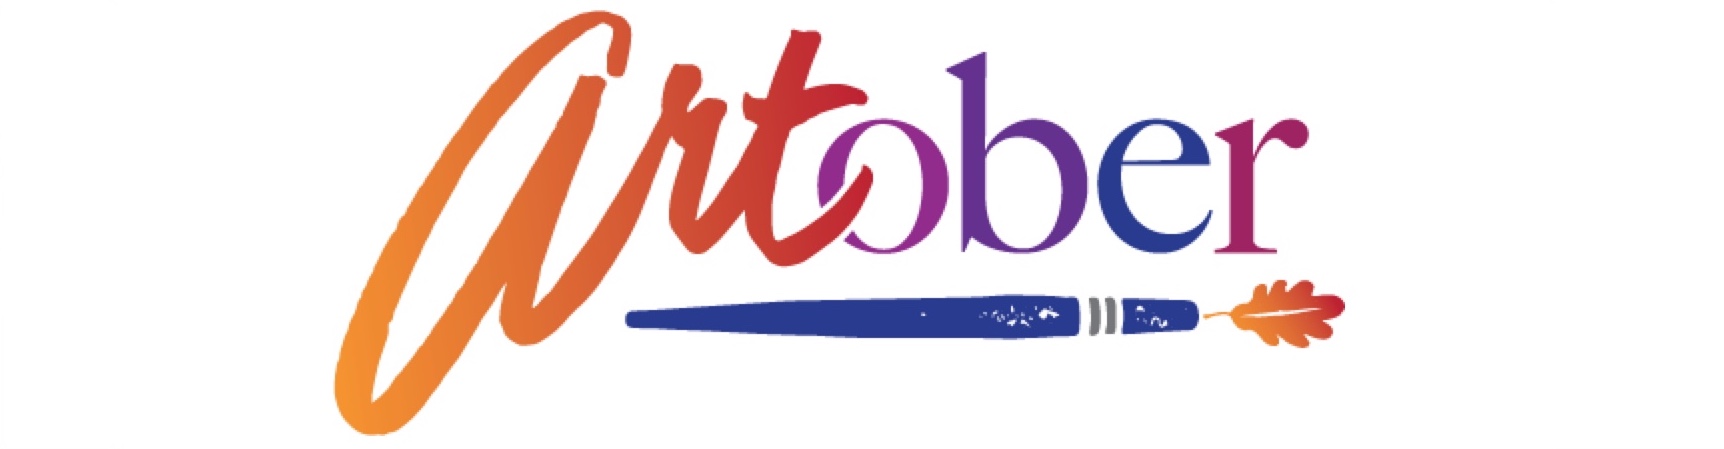 ARTober logo 1